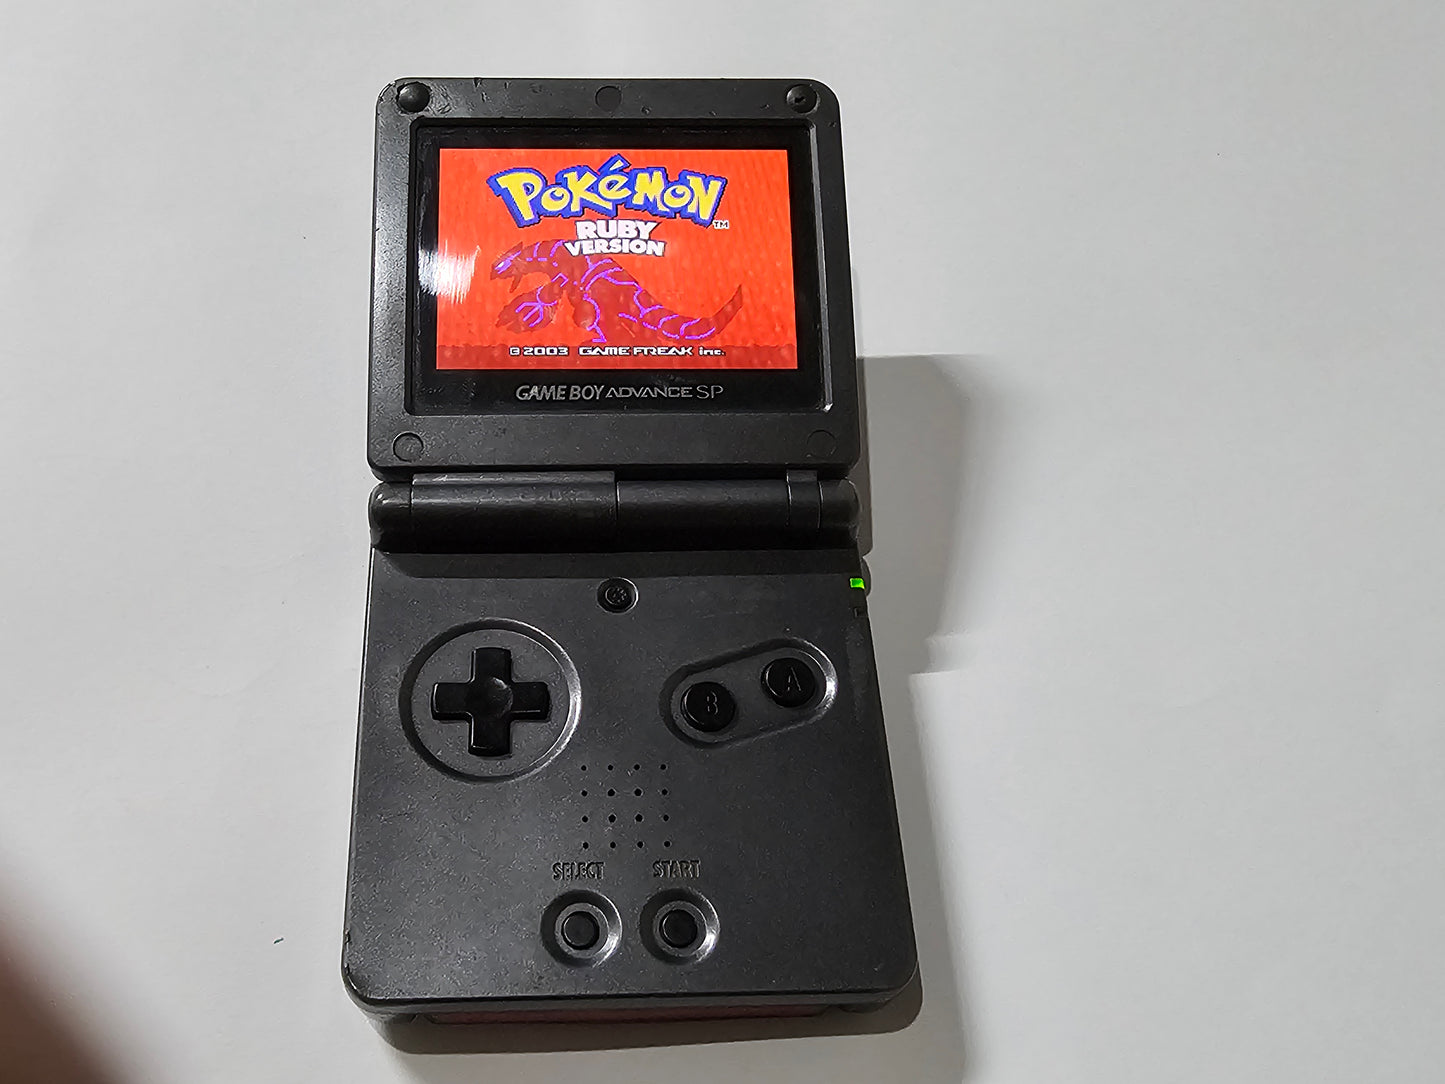 Pokemon Ruby Solo Cartucho (Loose) Nintendo Game Boy Advance